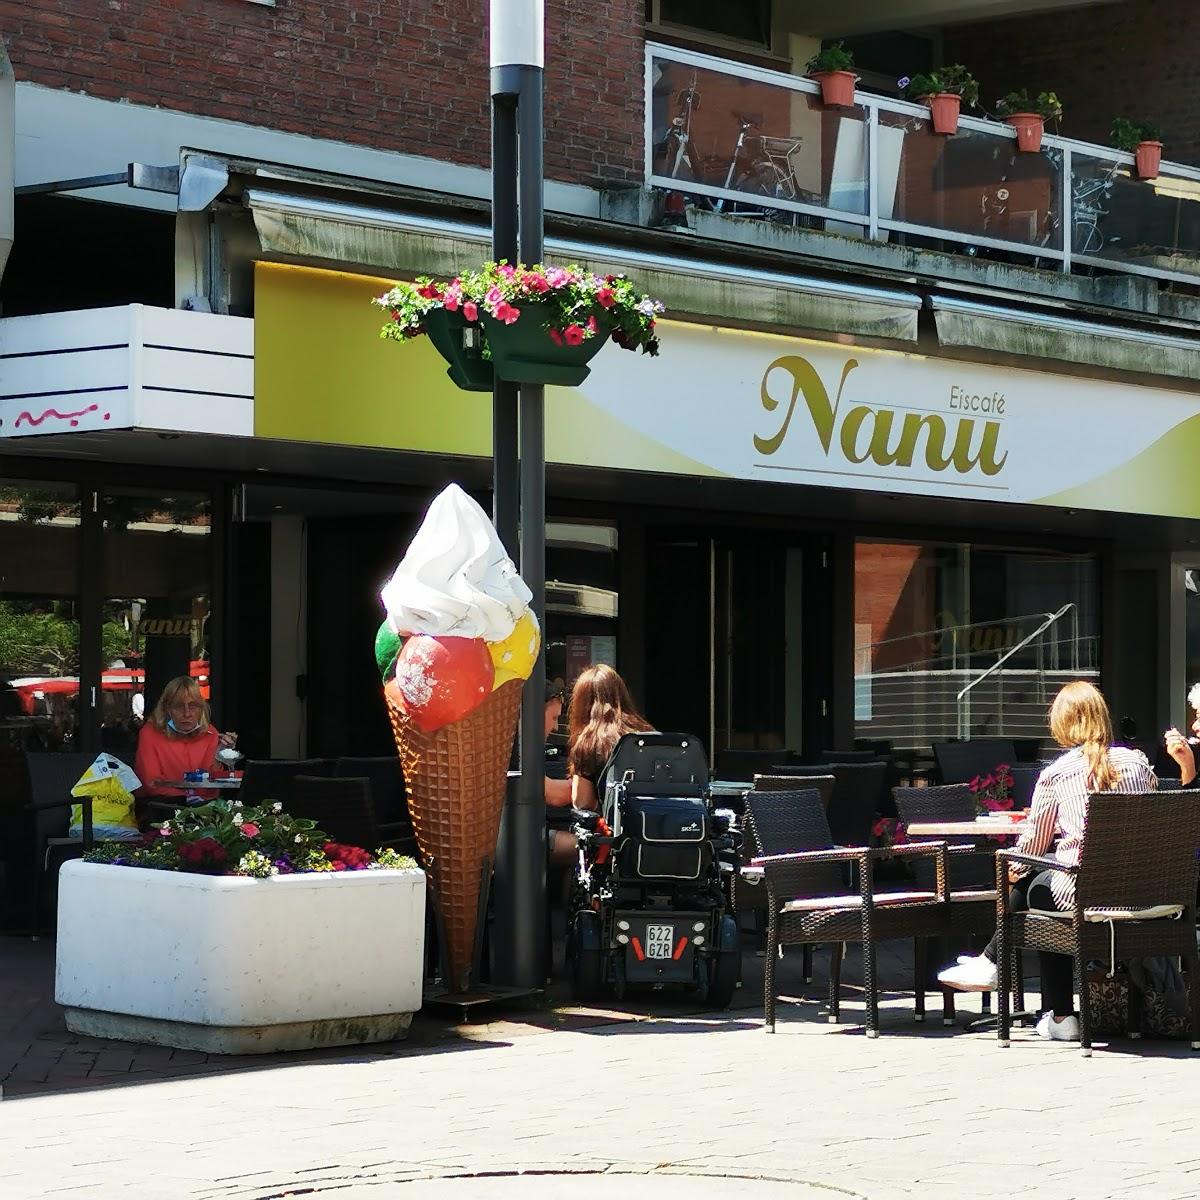 Restaurant "Eiscafé Nanu" in Emsdetten